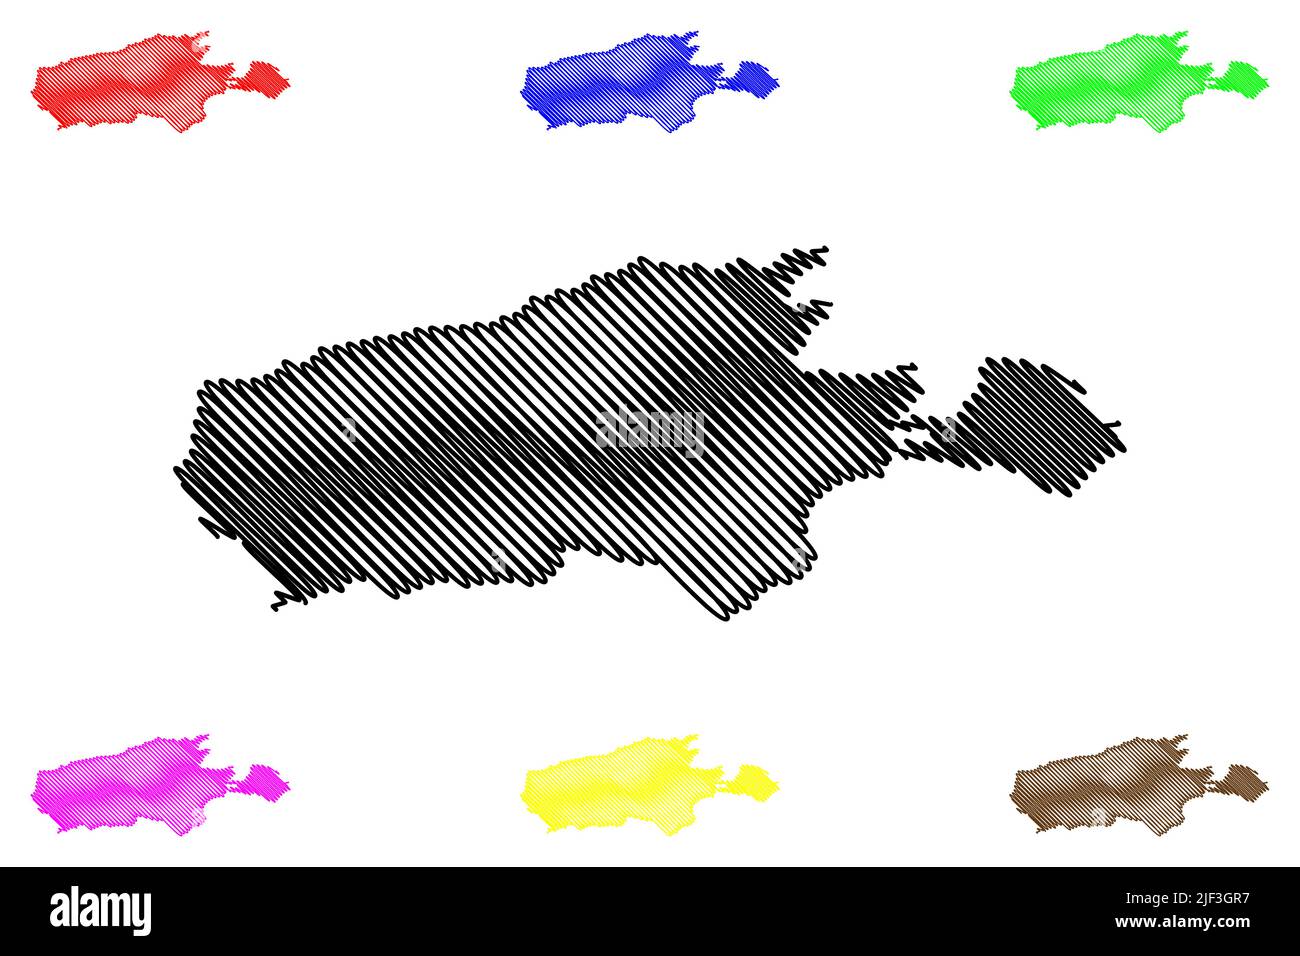 Isla Canguro (Great Australian Bight, Commonwealth of Australia) ilustración de vectores de mapa, boceto de garabatos Karta Pintingga o mapa del pueblo de Kartan Ilustración del Vector